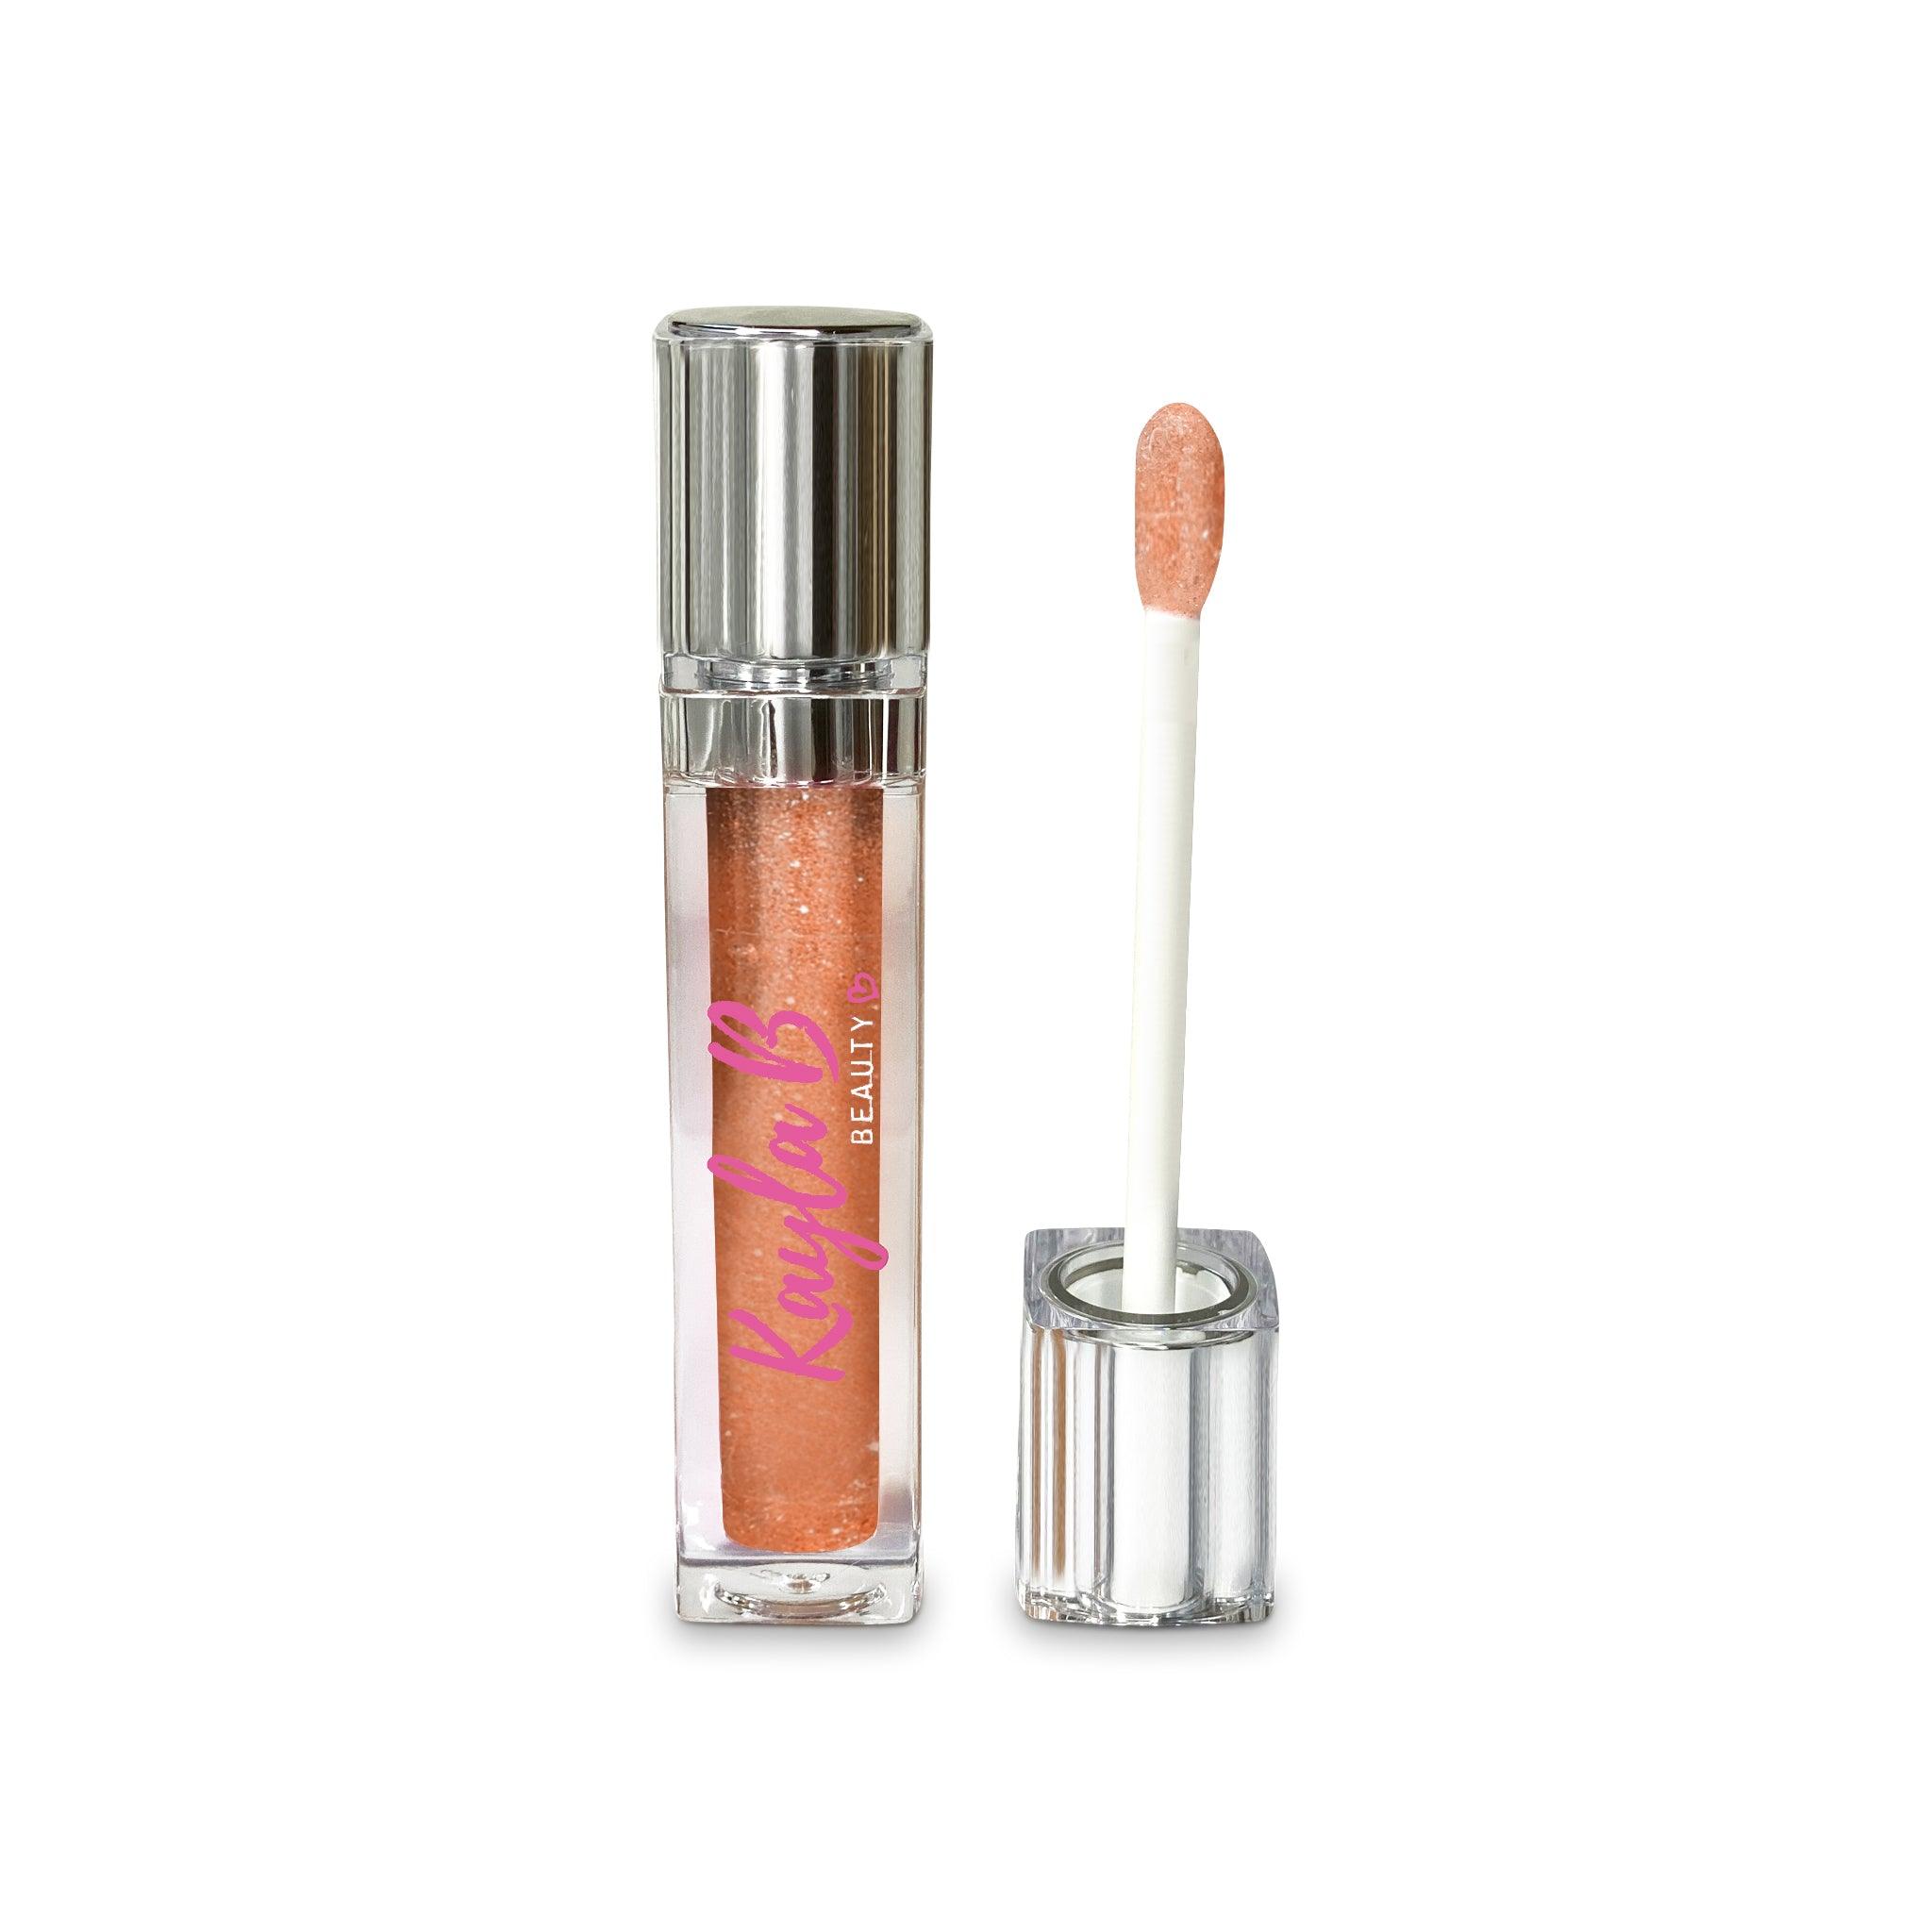 Obsessed - Kayla B Beauty - Flavored Lip Gloss, Glitter Lip Gloss